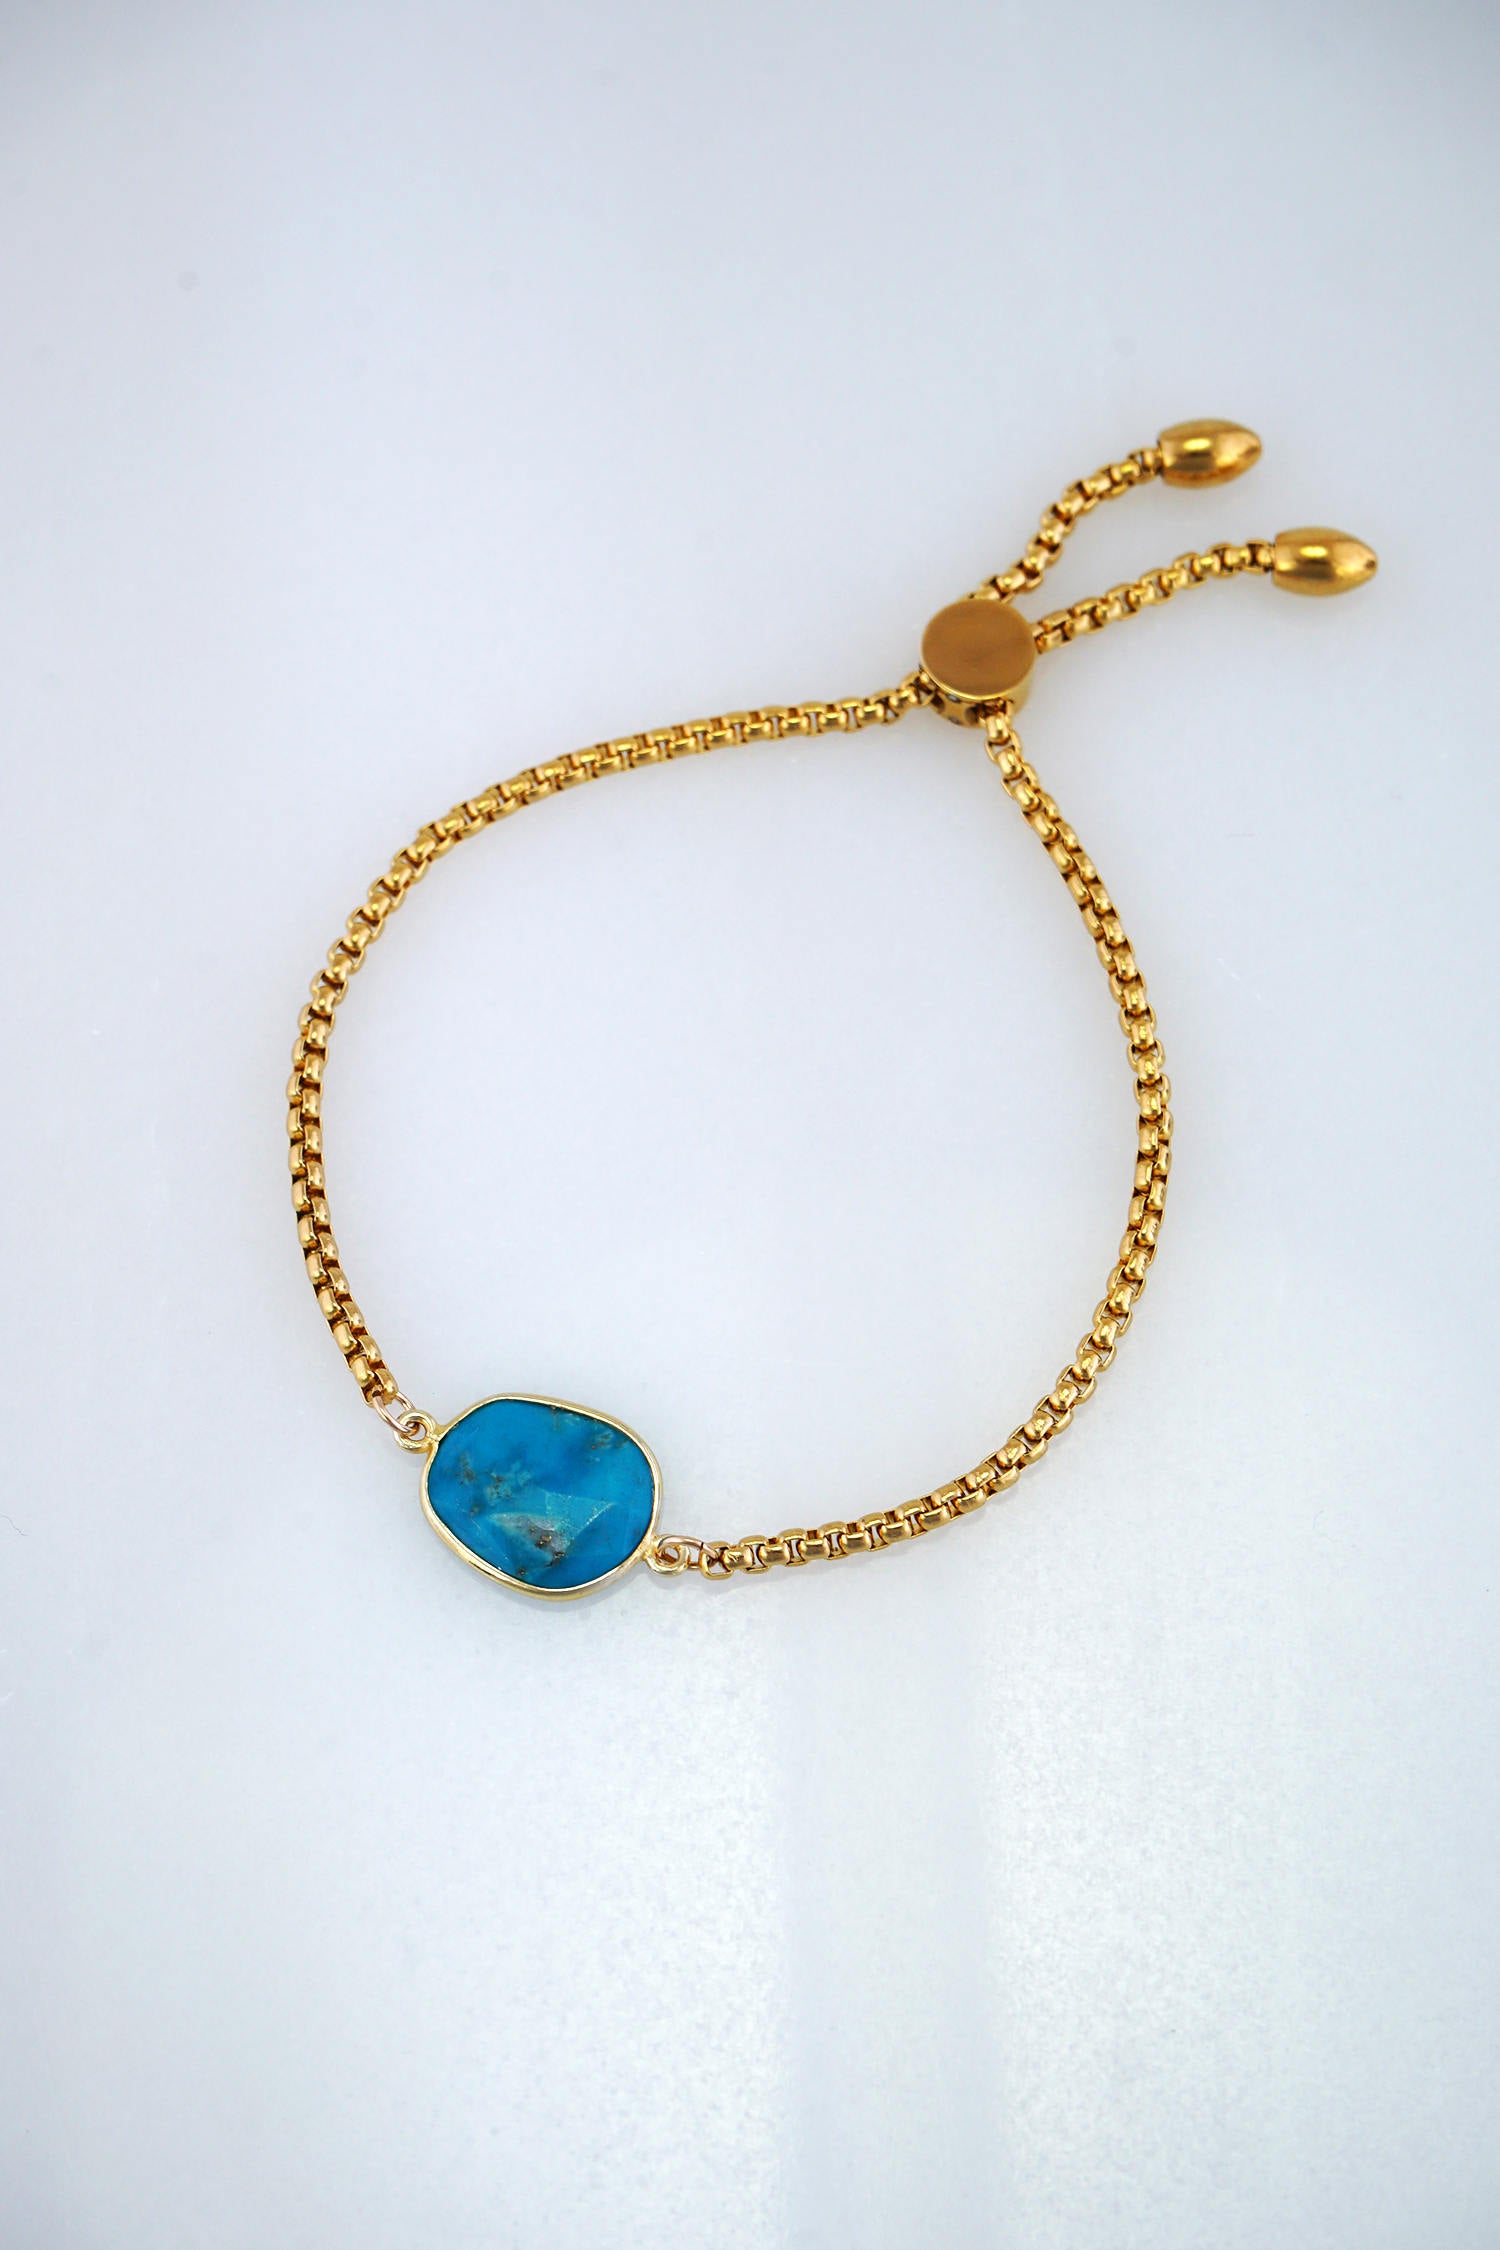 December Birthstone Bracelet, Turquoise Gemstone Bracelet, Adjustable bracelet, Gold Designer Bracelet, Bezel set bracelet, Bridesmaid Gift